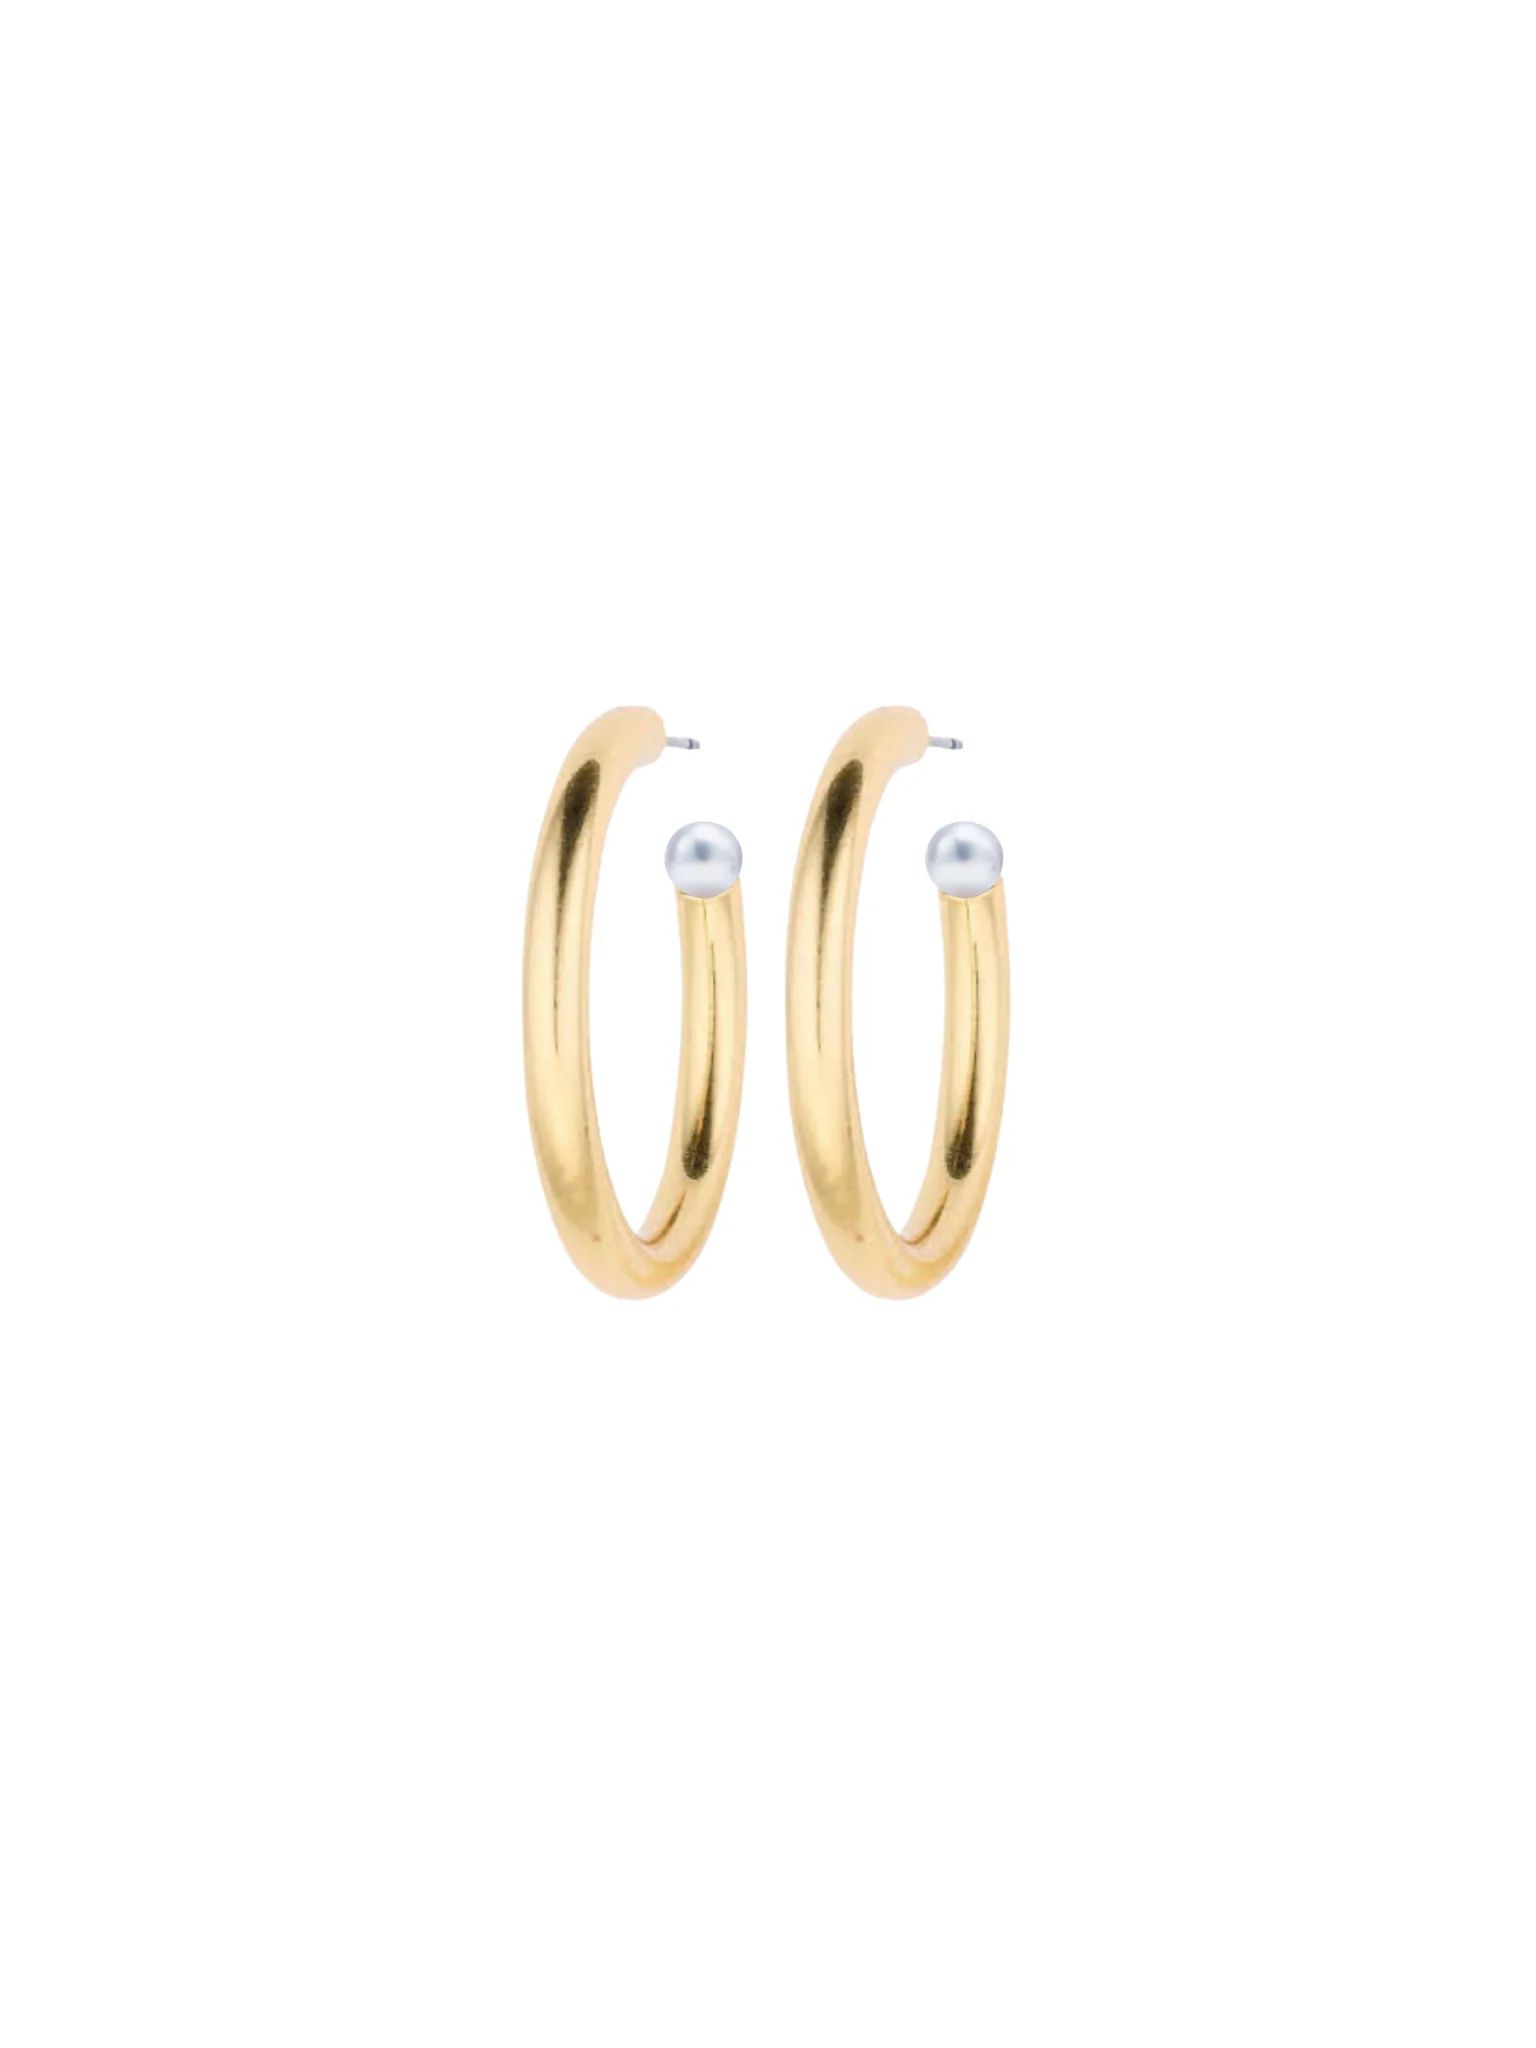 pre-order: Chunky golden hoops + pearl | Nicola Bathie Jewelry